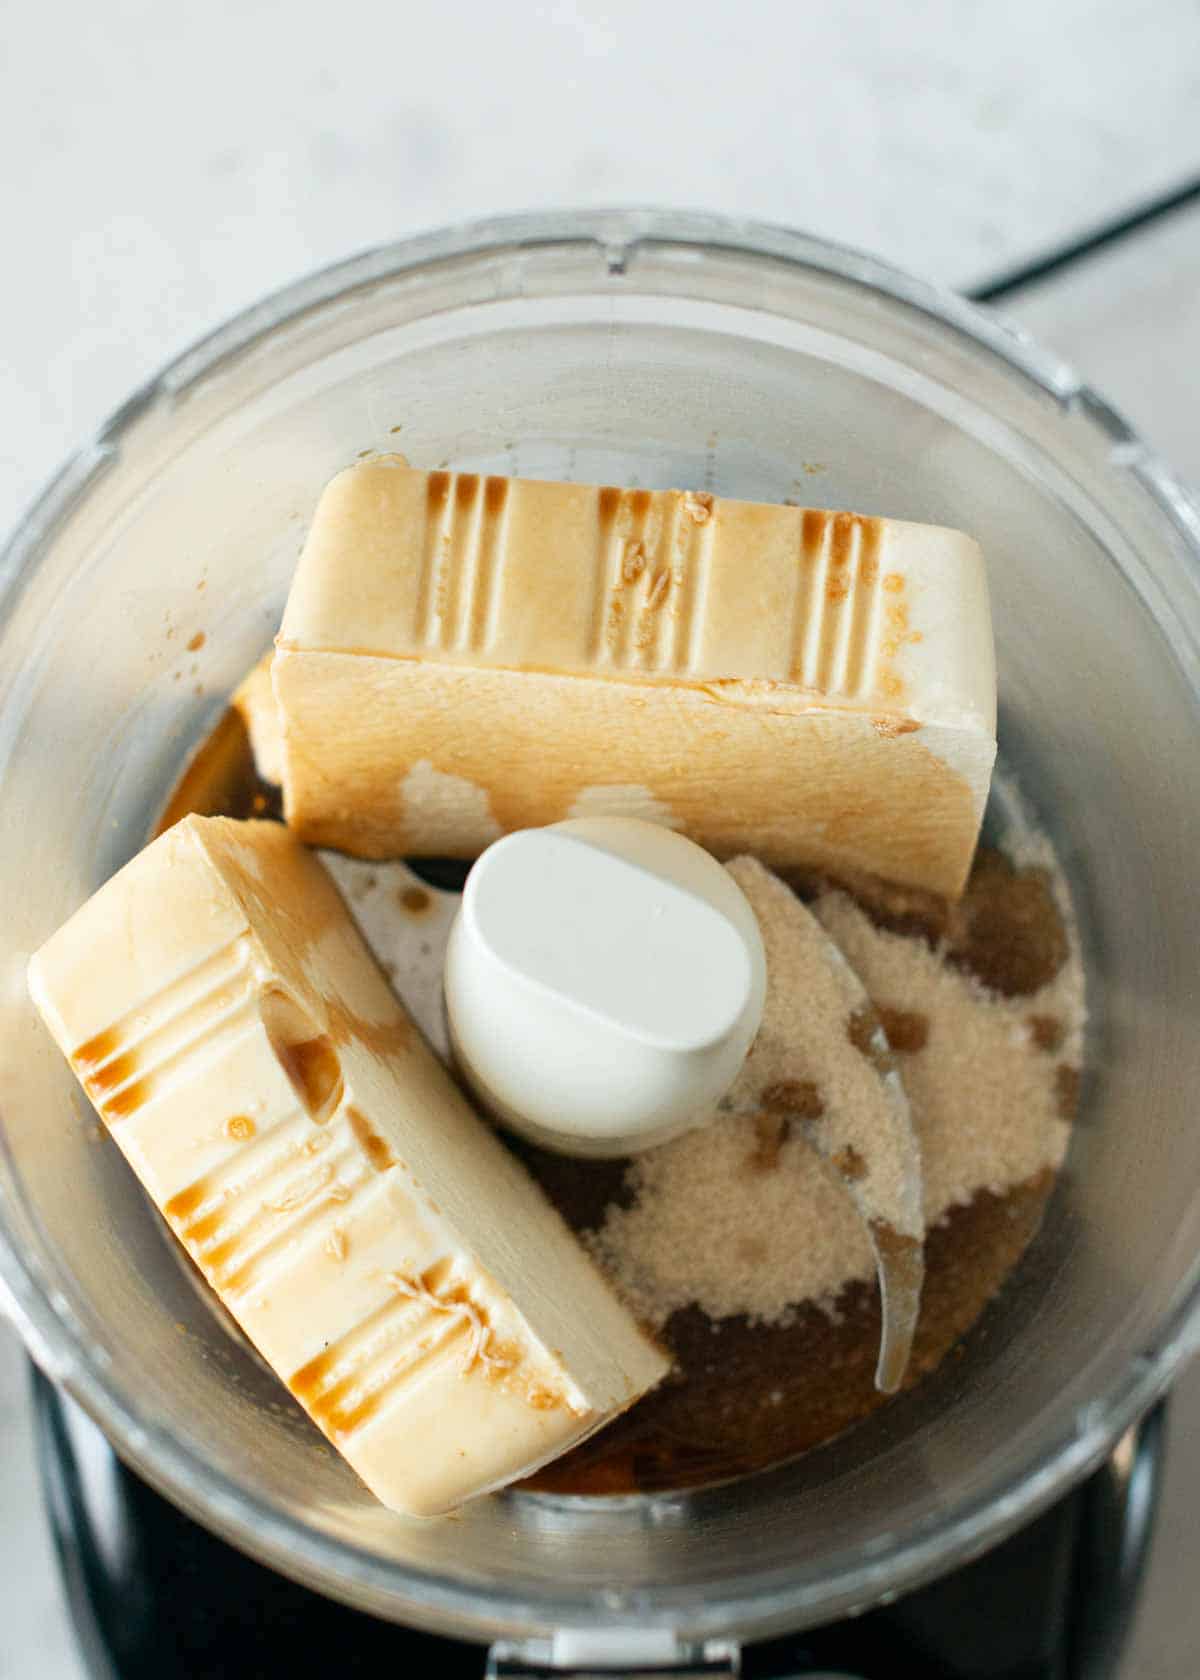 Image: Vegan Tofu Chocolate Pudding ingreidnets into a food processor